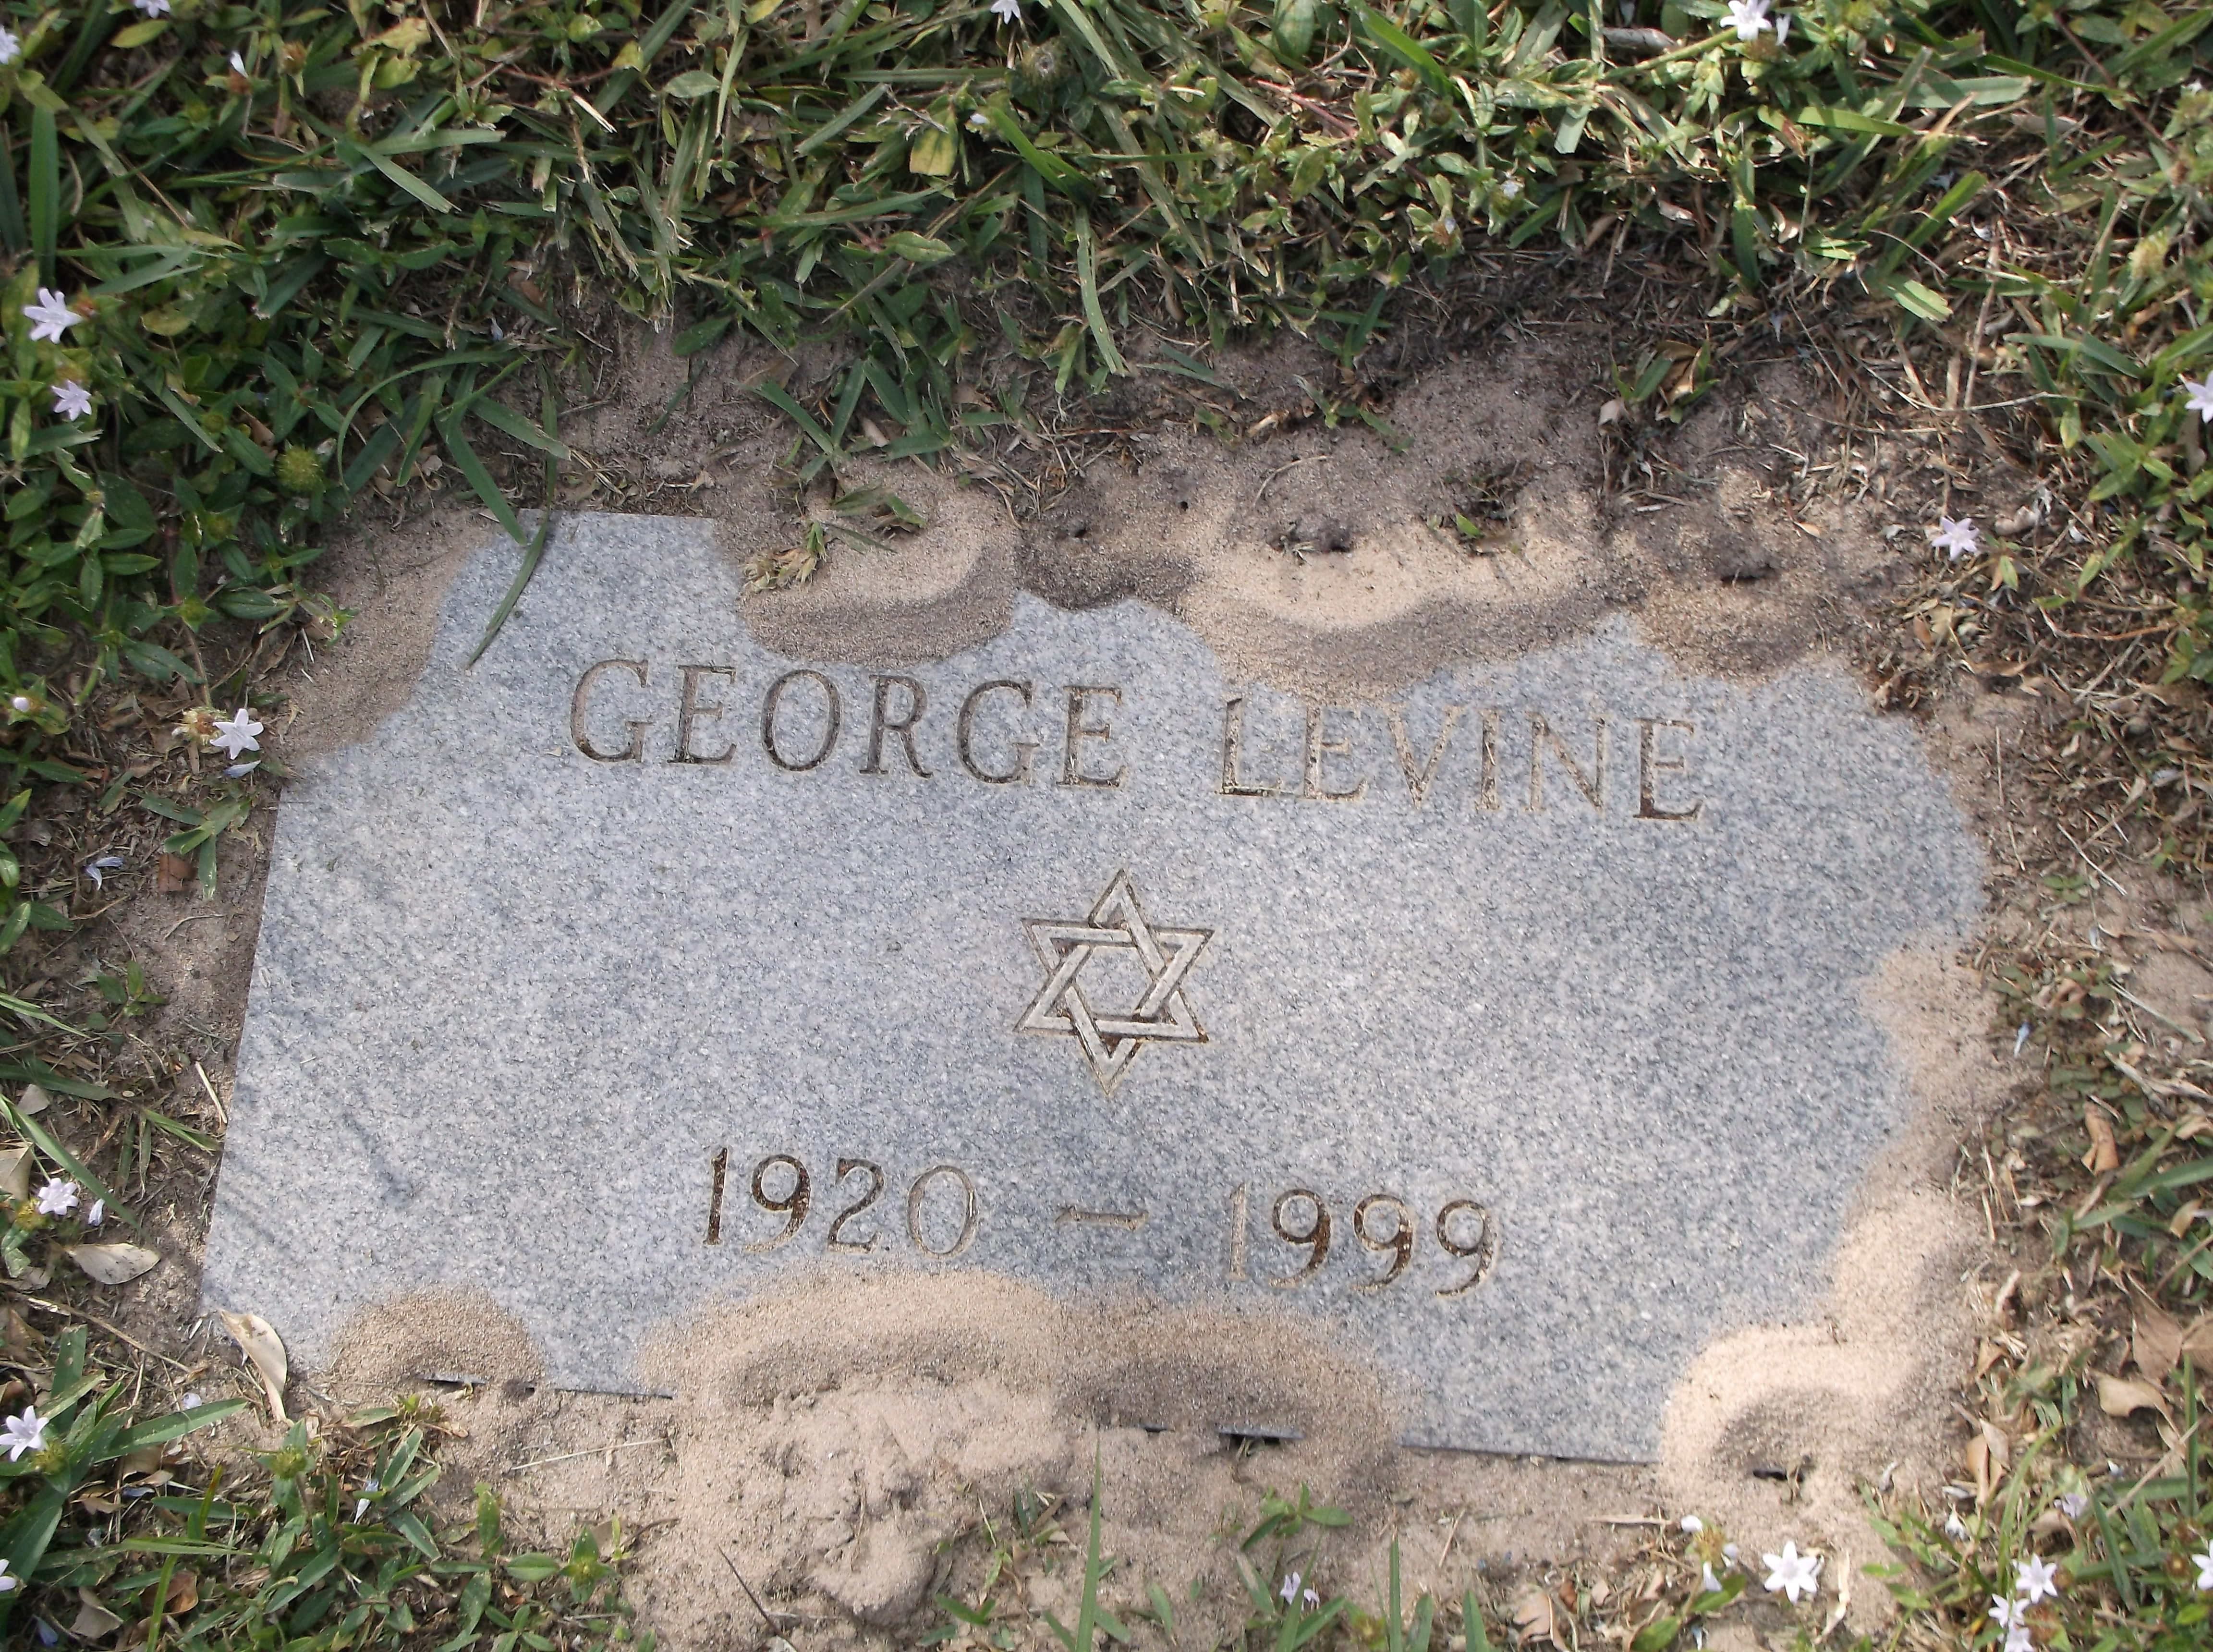 George Levine